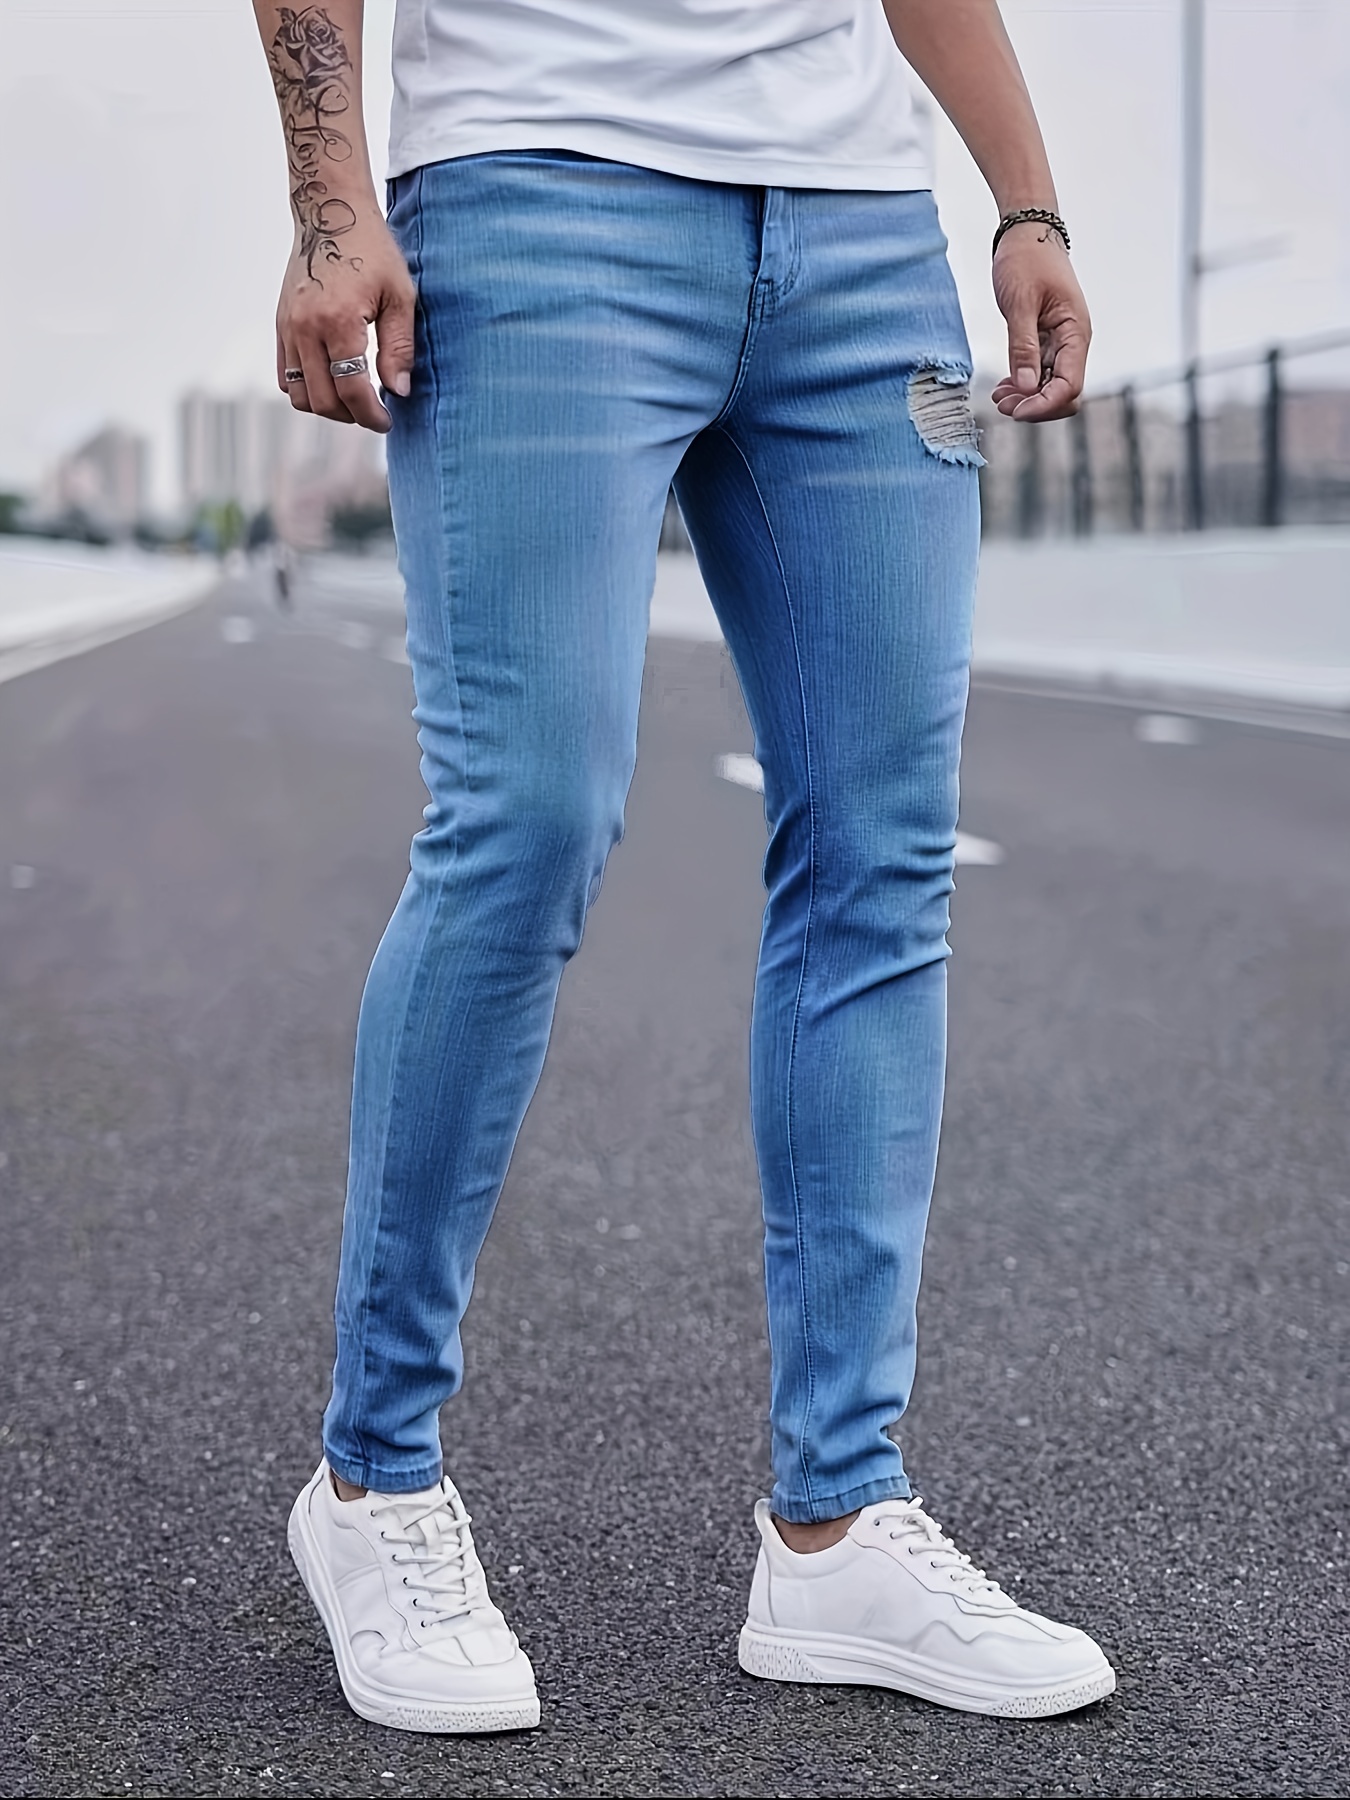 royal blue skinny jeans for men